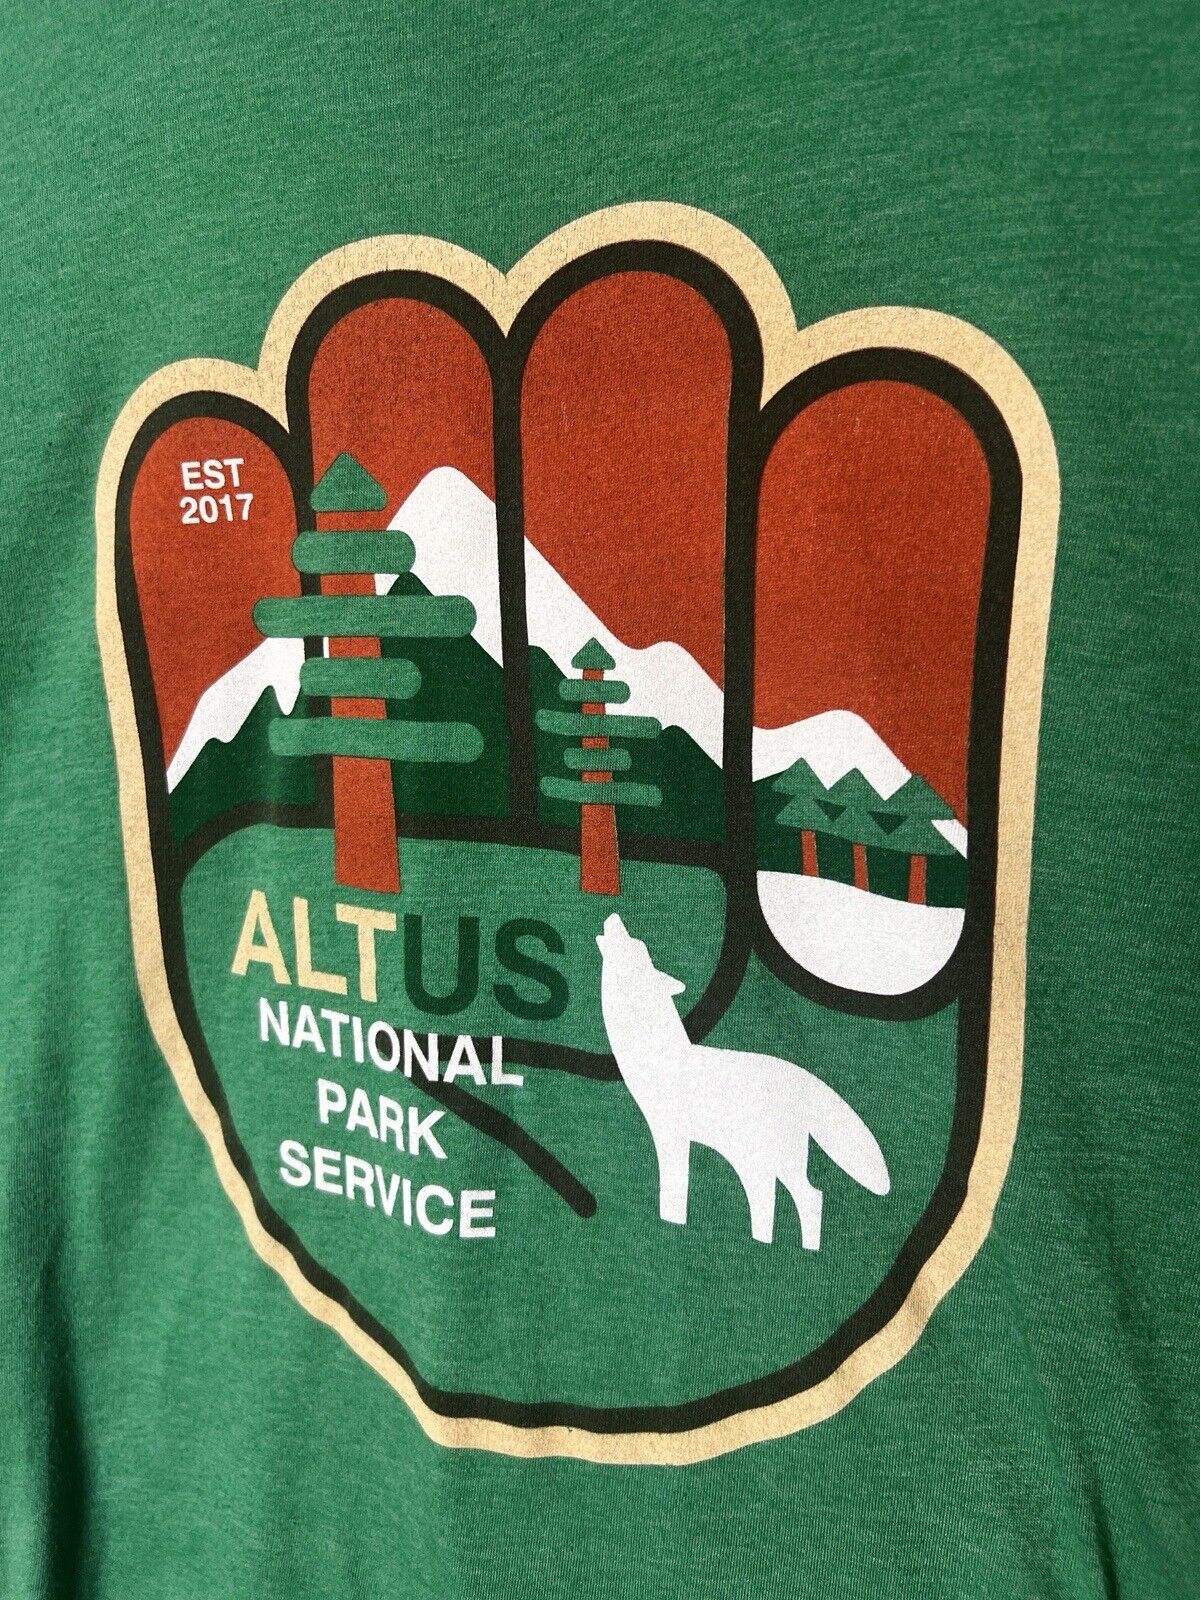 ALTUS ALT US National Park Service SS T-shirt SIZE XL GREEN ENVIRONMENTAL ACTION